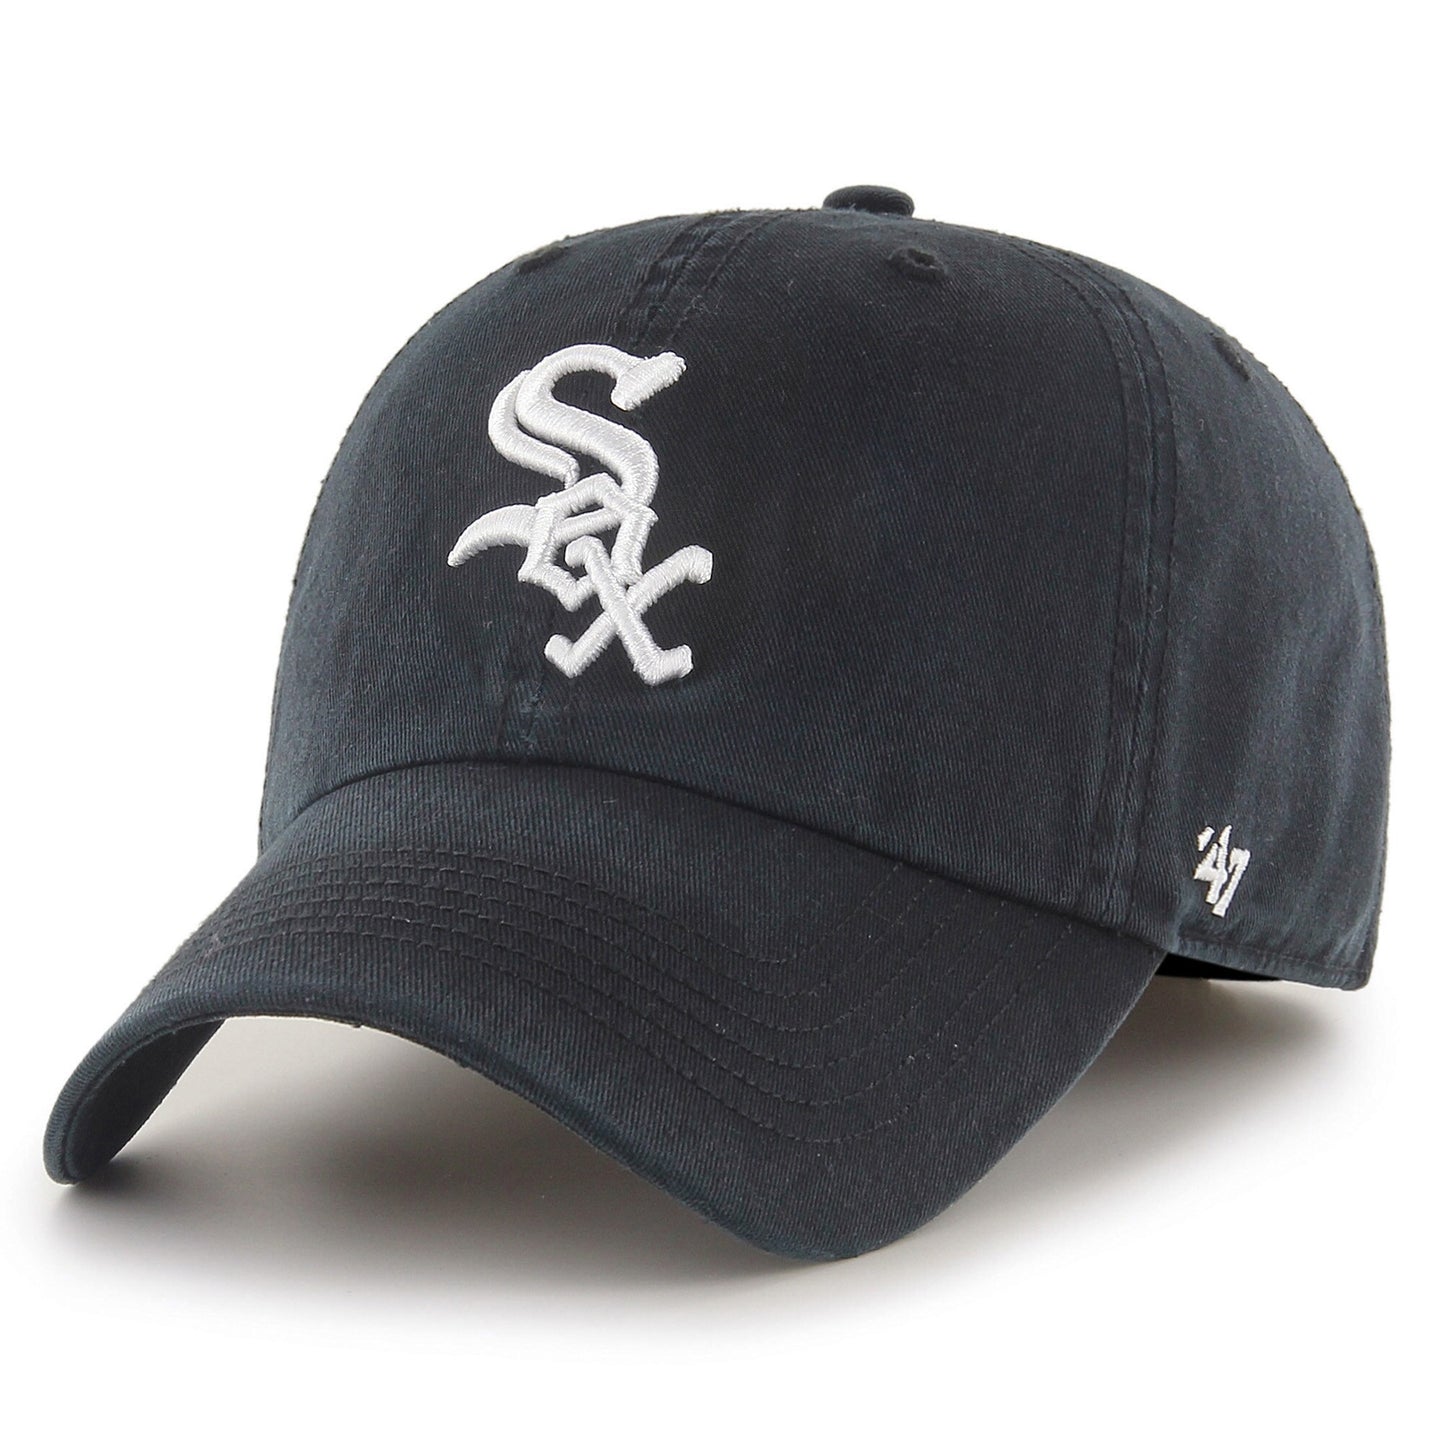 Chicago White Sox '47 Franchise Logo Fitted Hat - Black